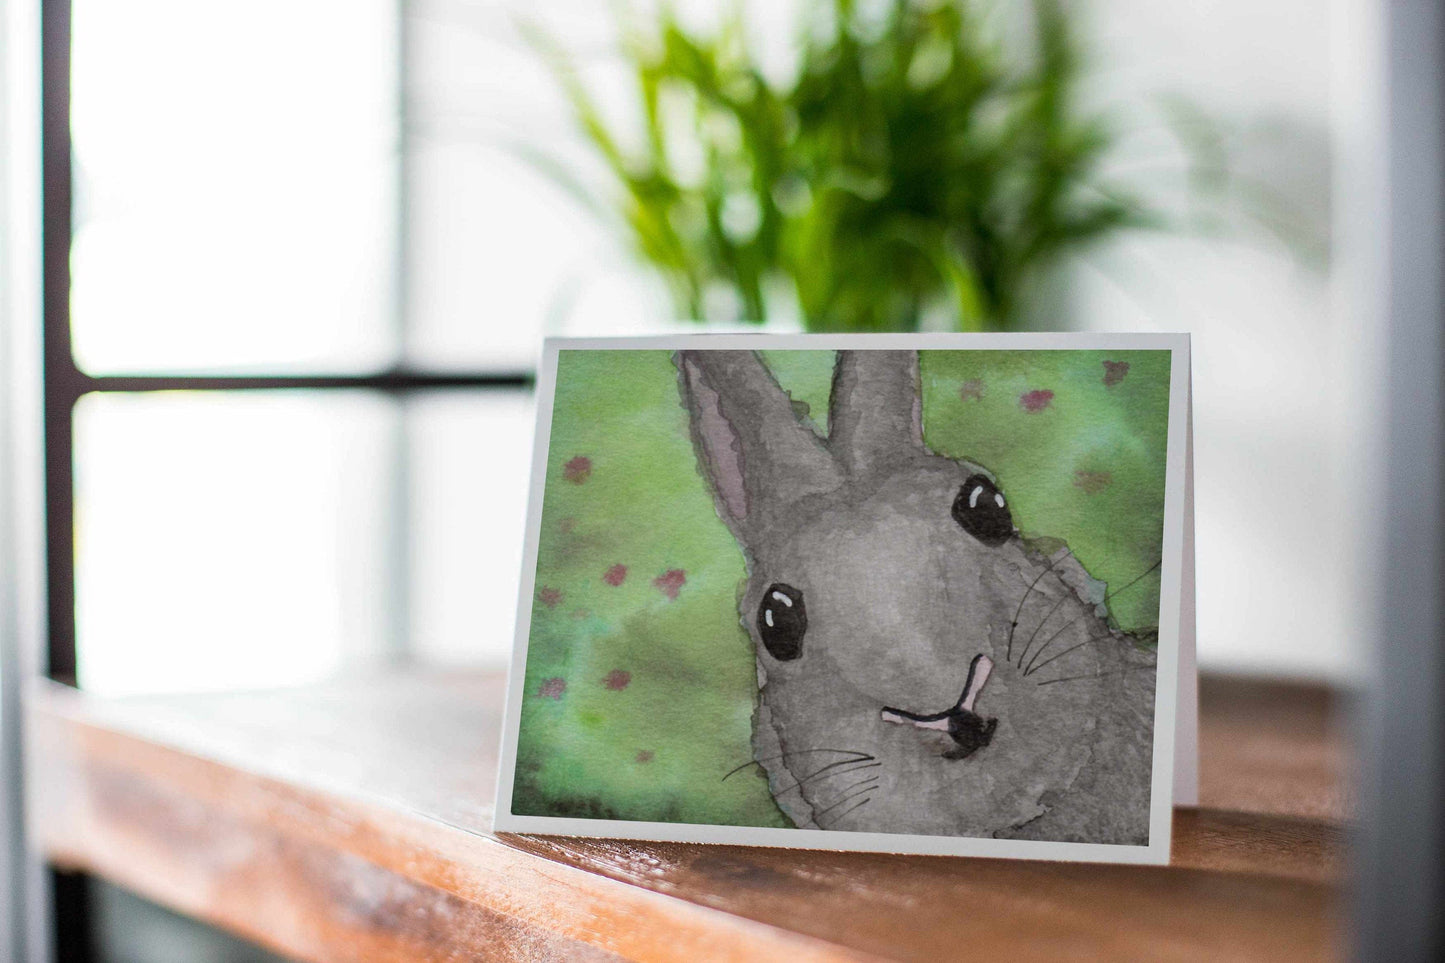 PinkPolish Design Note Cards "Bunny Surprise" Handmade Notecard